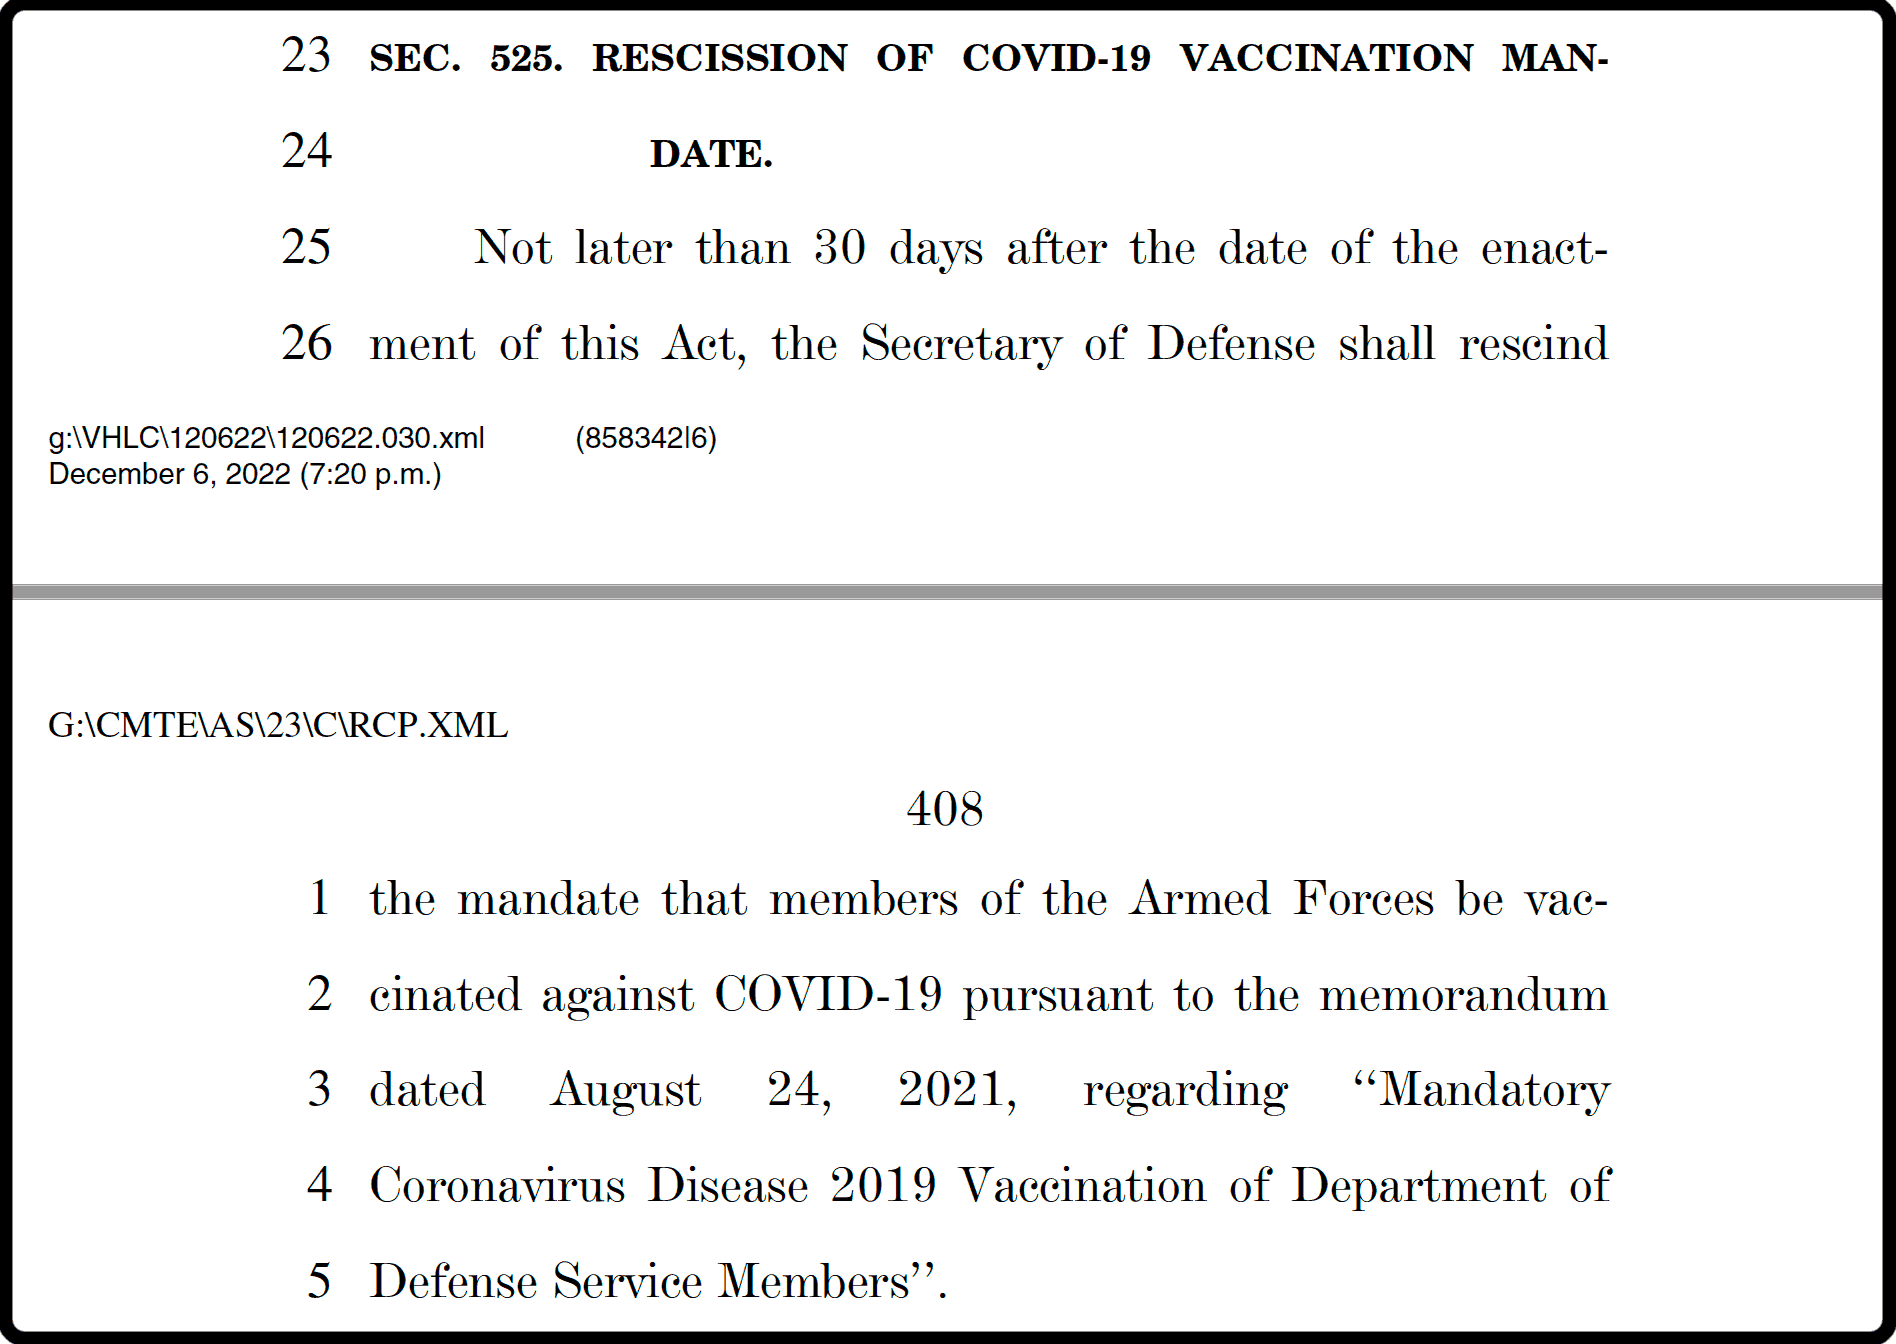 Sec. 525 Rescission of COVID-19 Vaccination Mandate